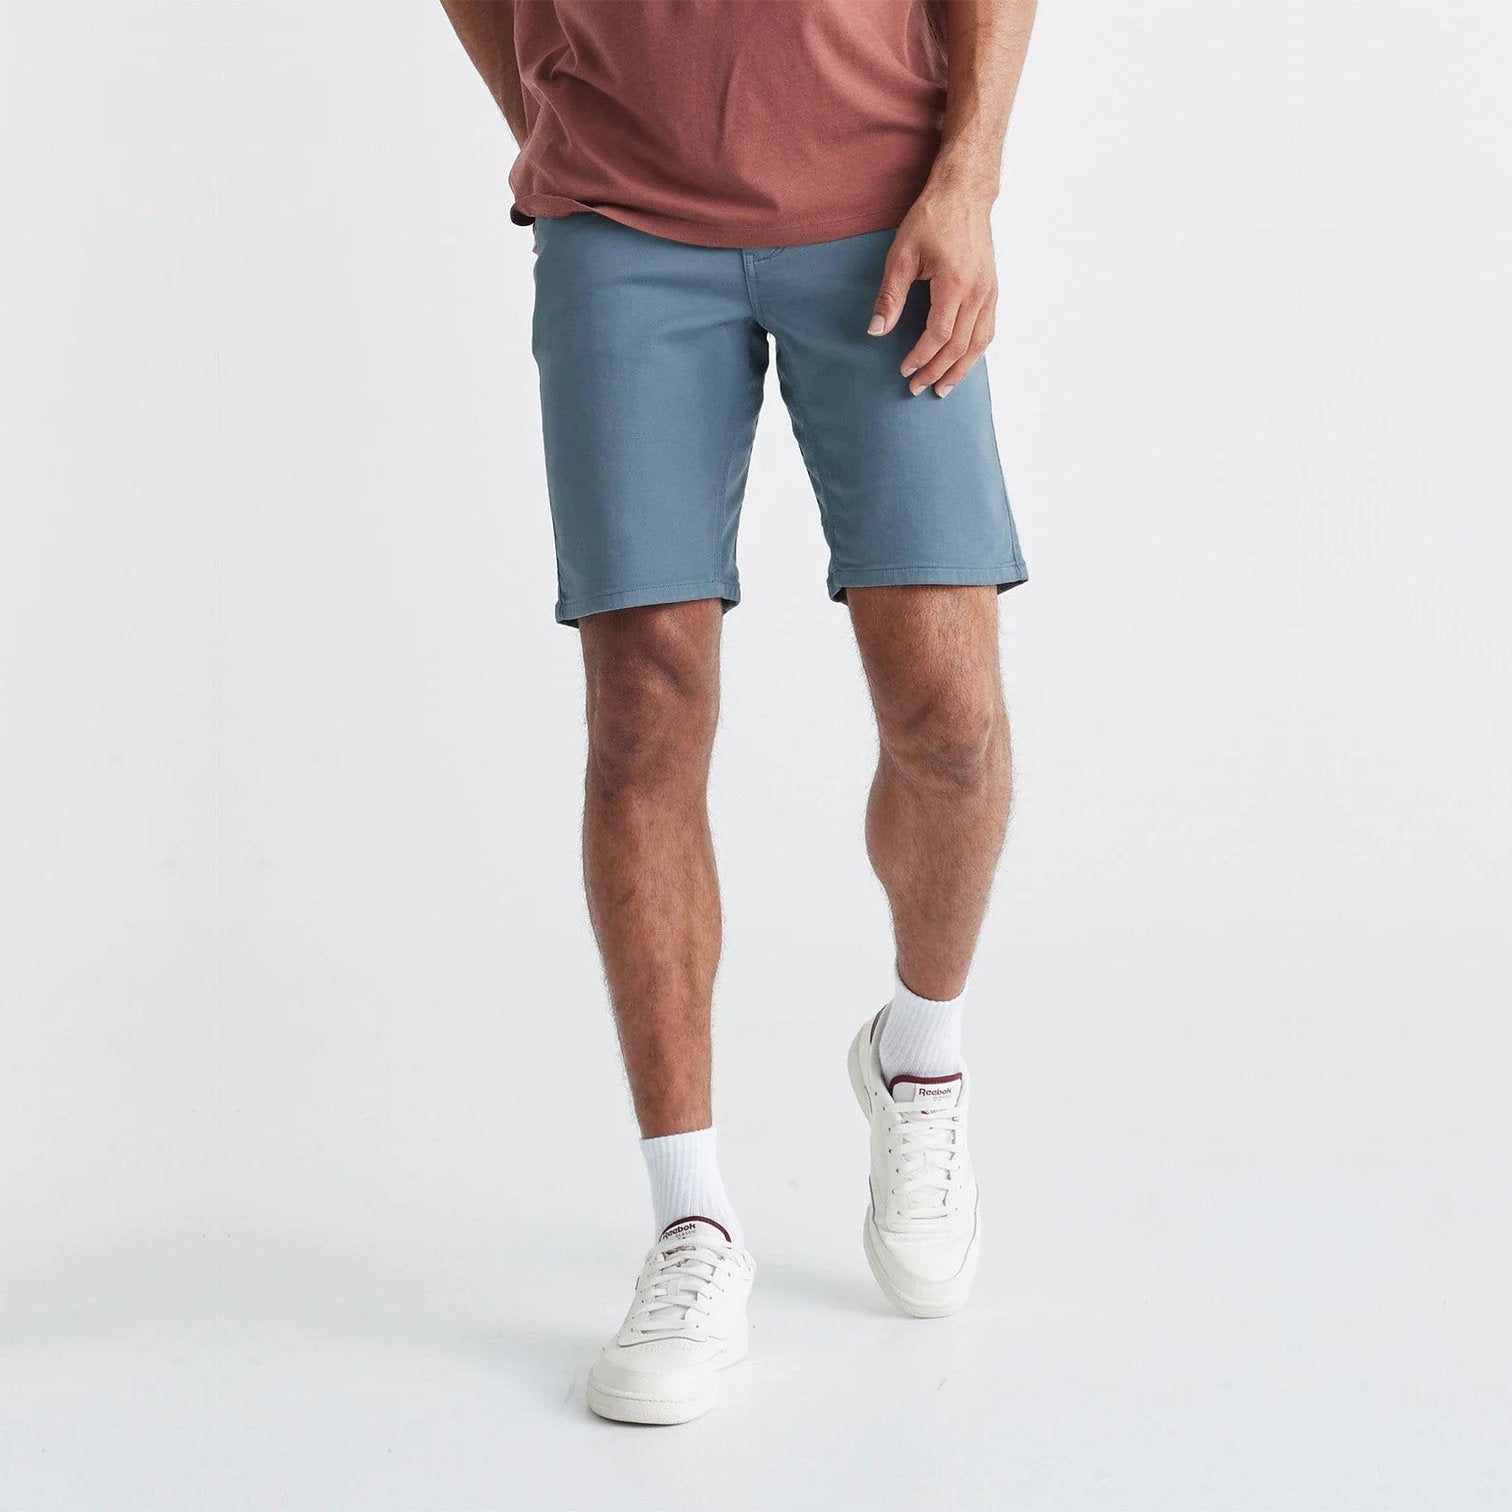 'Du/er No Sweat Shorts Slim' in 'Stone Blue' colour